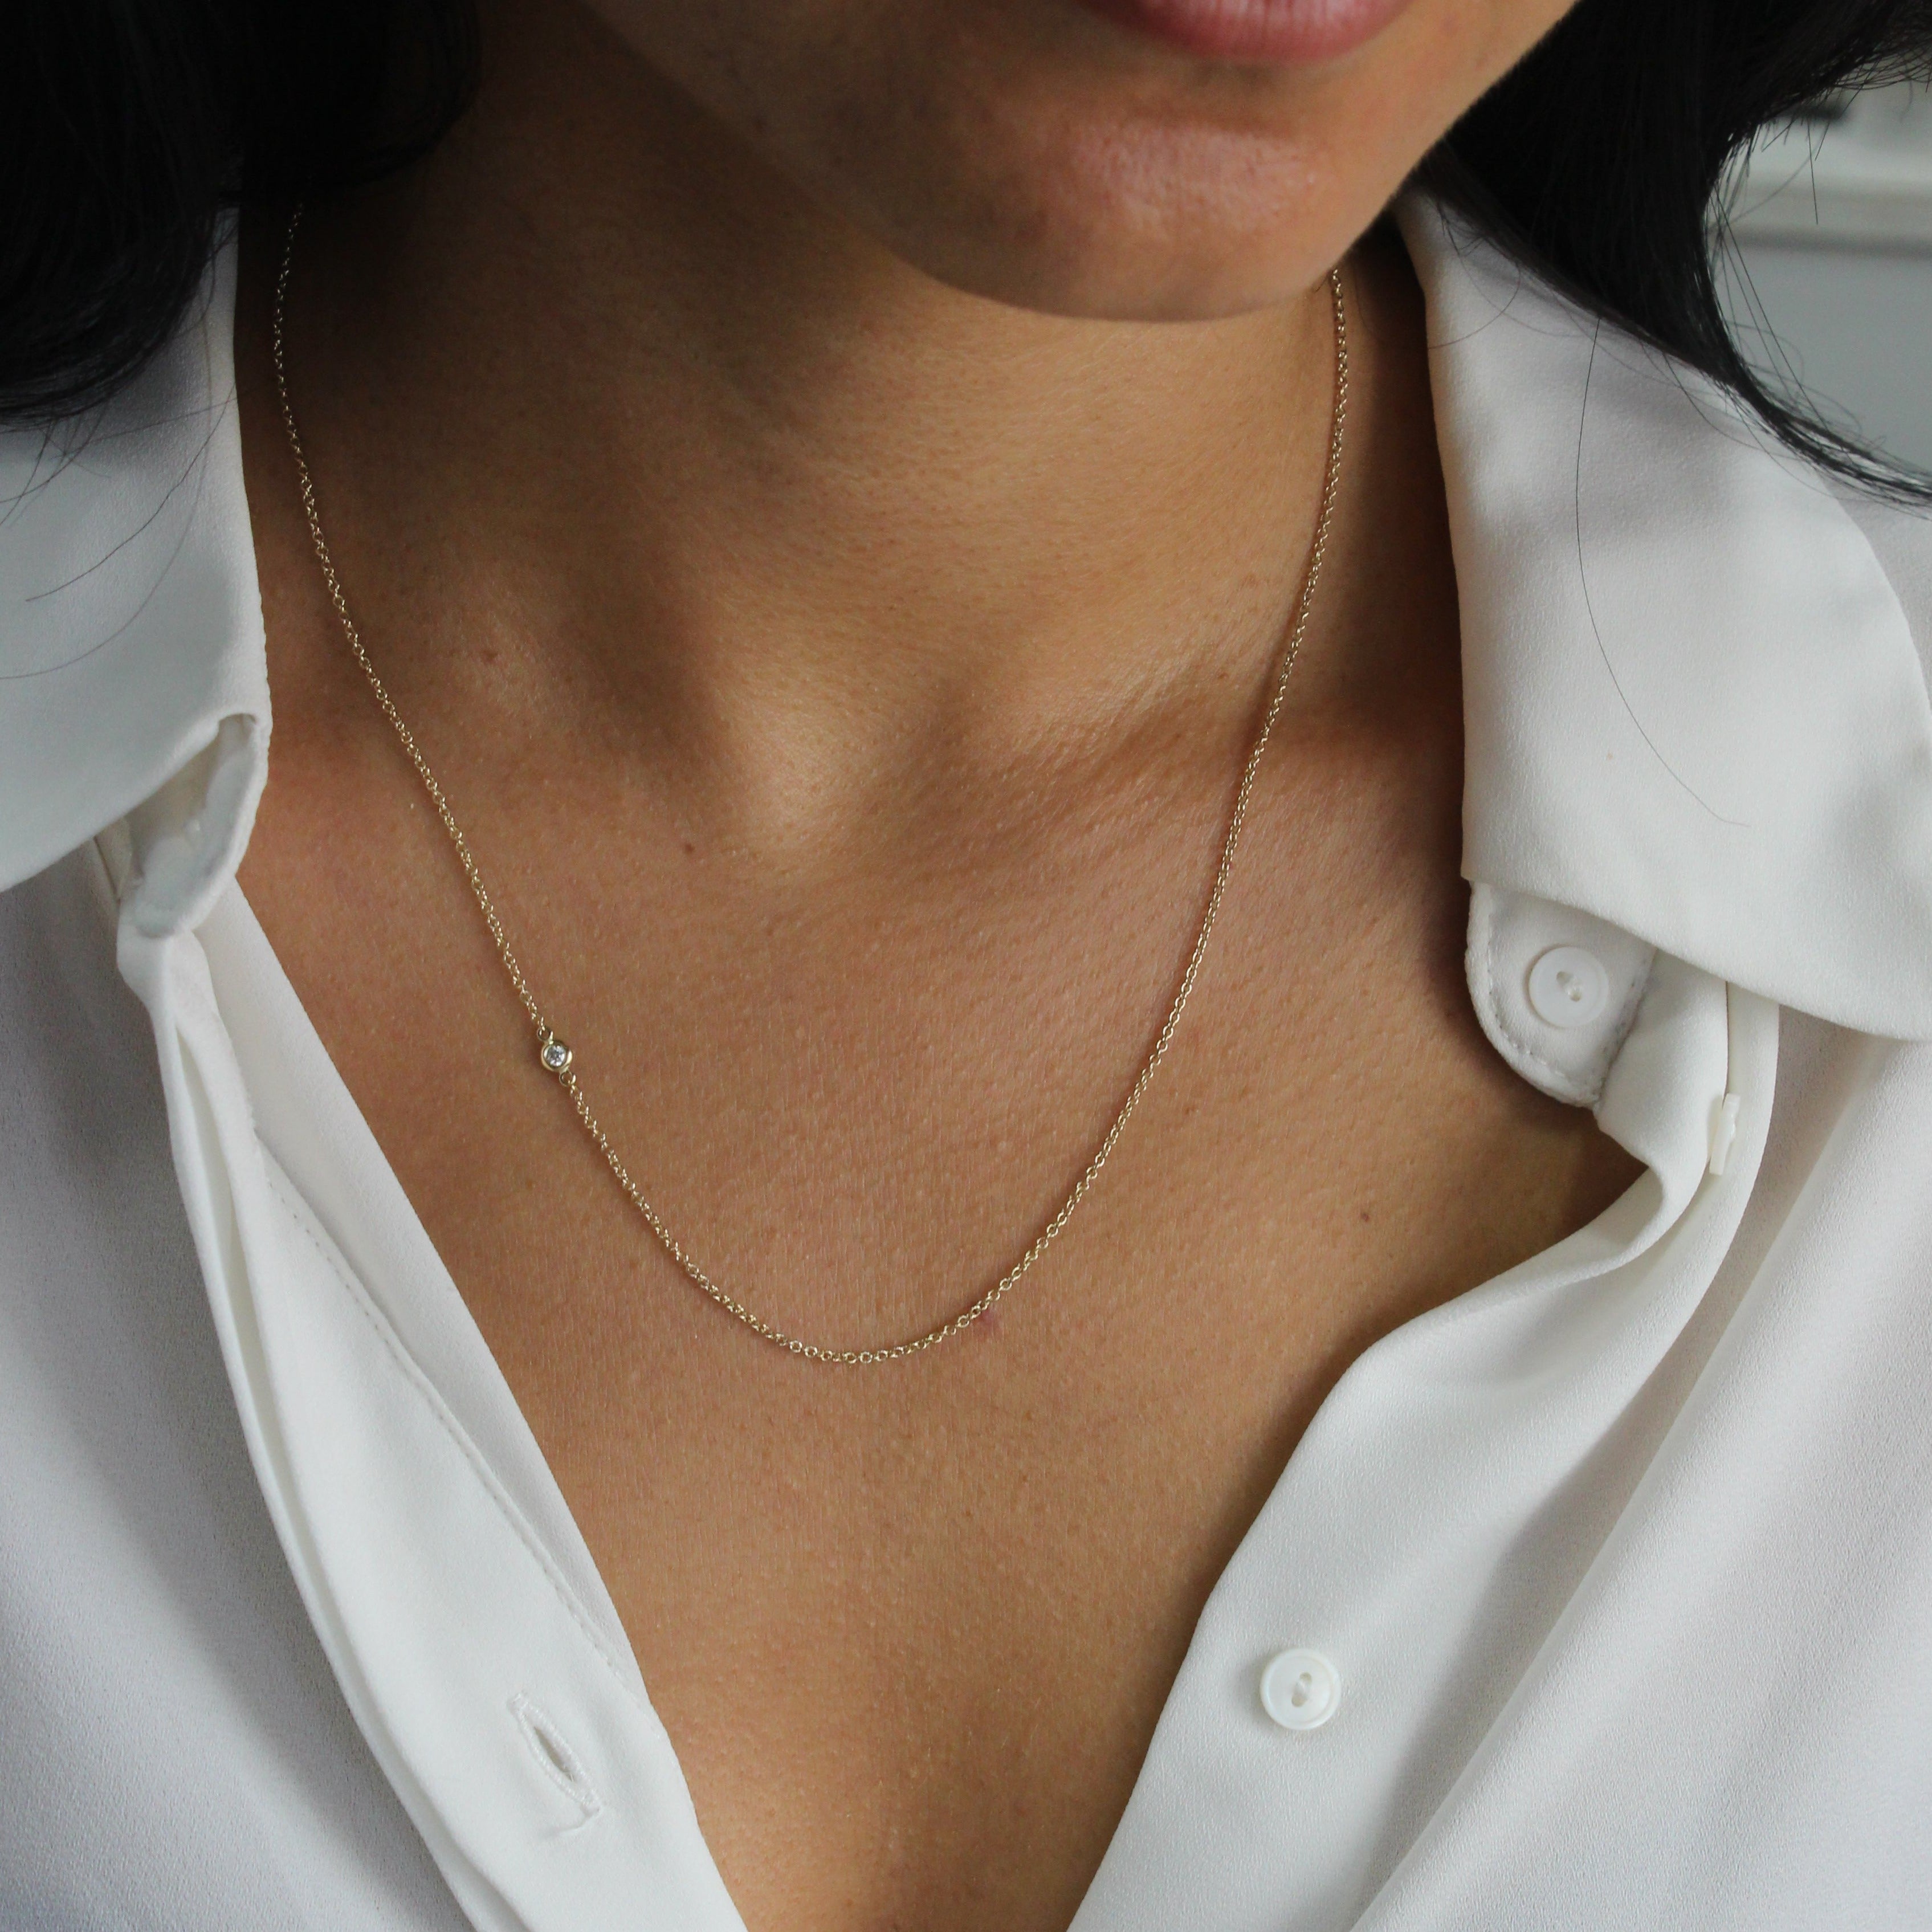 Alexis gold Necklace with White Diamond